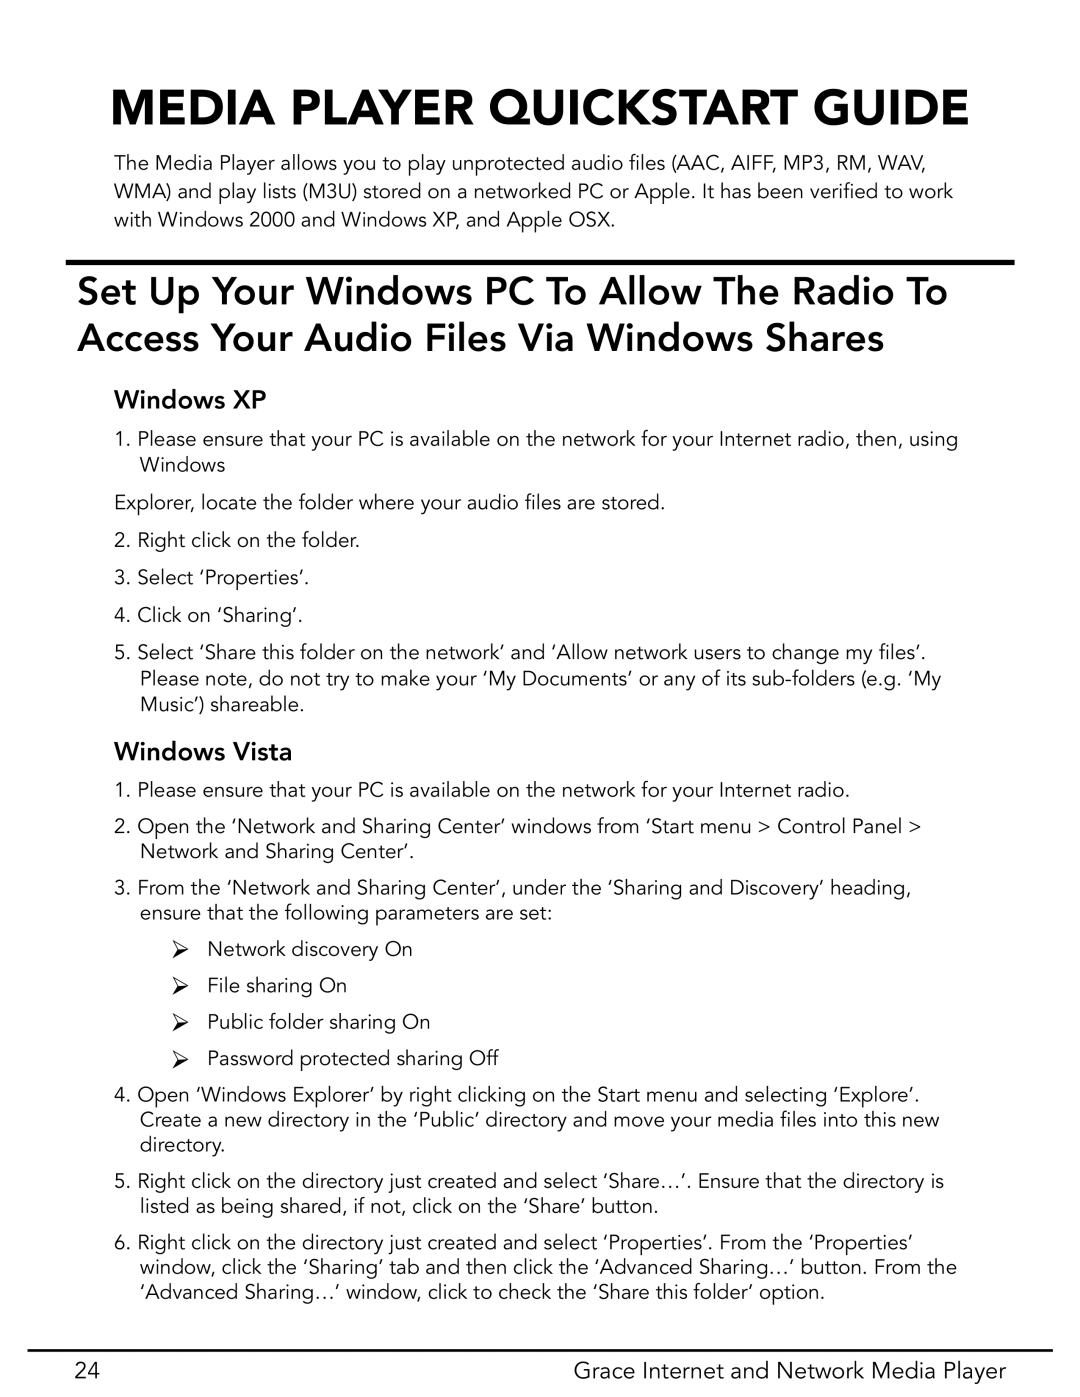 Grace GDI-IR3020 manual Media Player Quickstart Guide, Windows XP, Windows Vista, Grace Internet and Network Media Player 